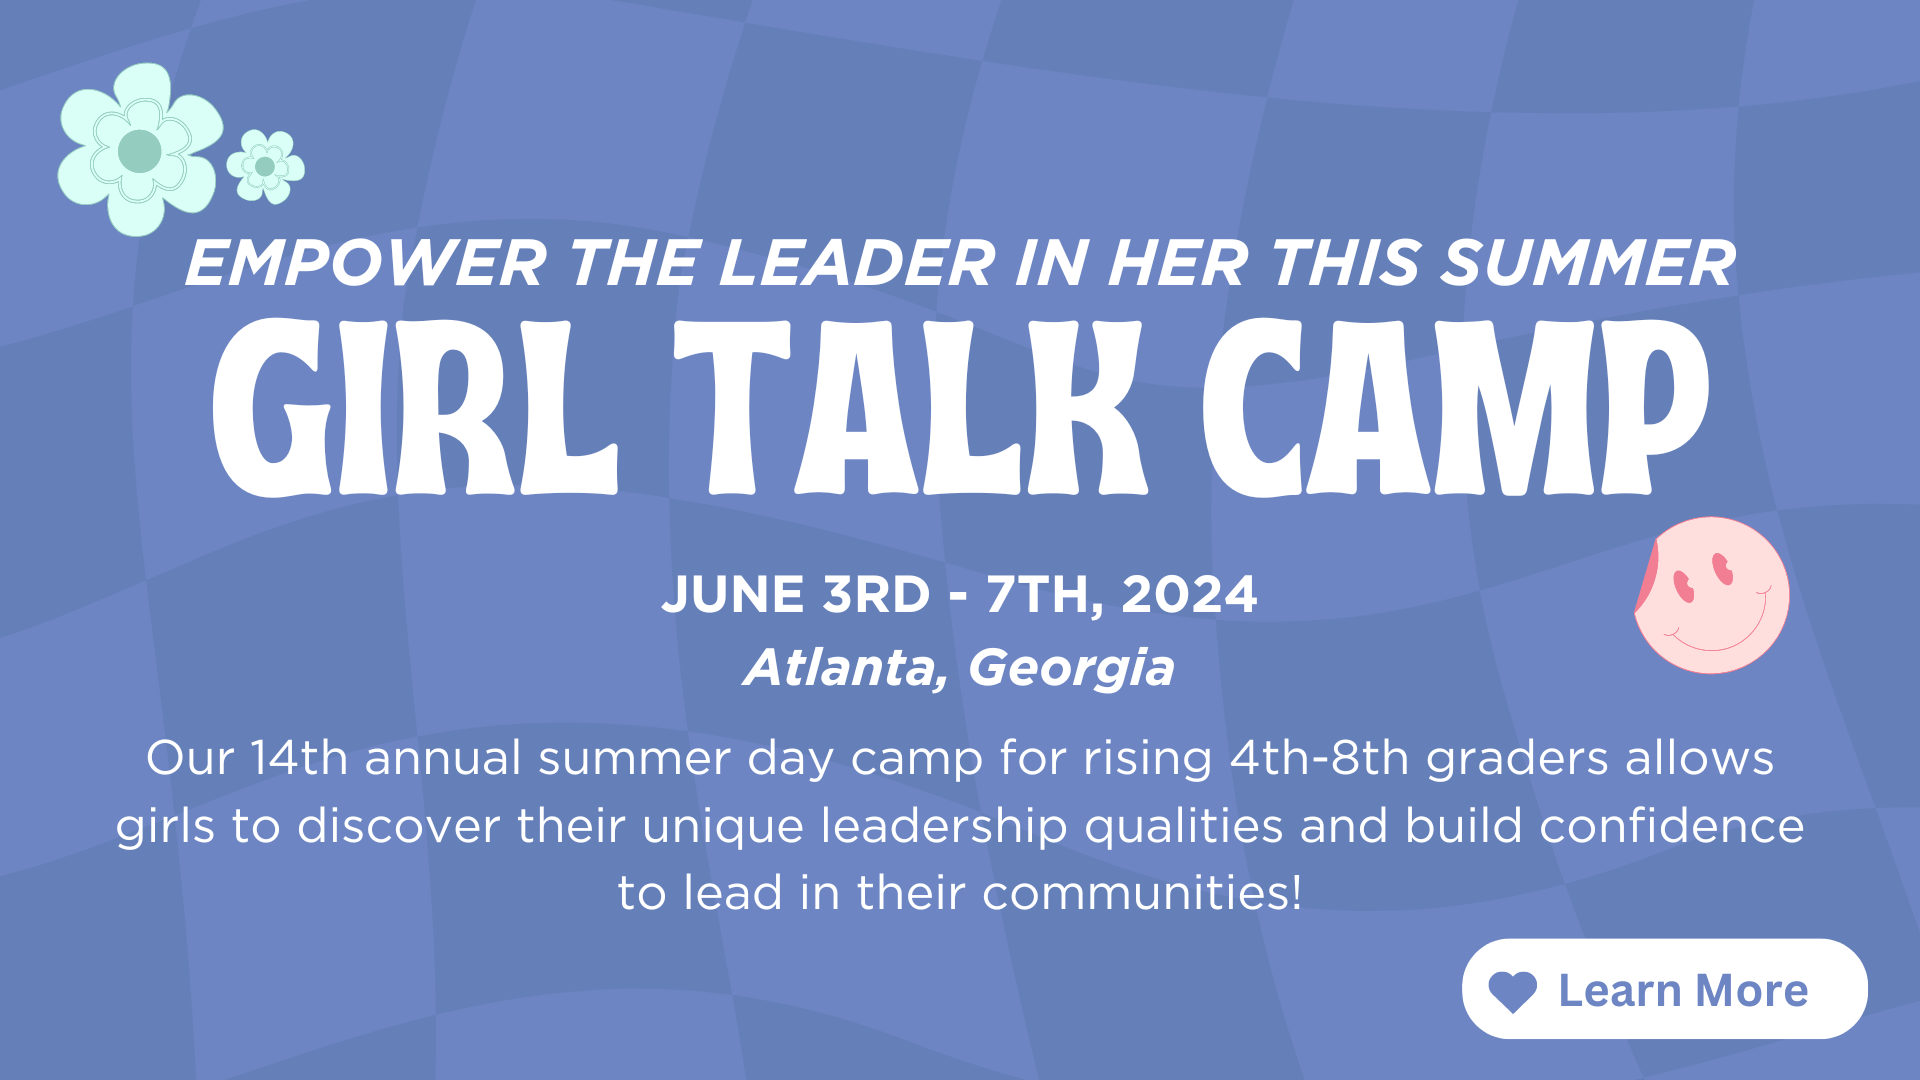 Girl Talk Camp Web Image (1920 x 1080 px) (2)